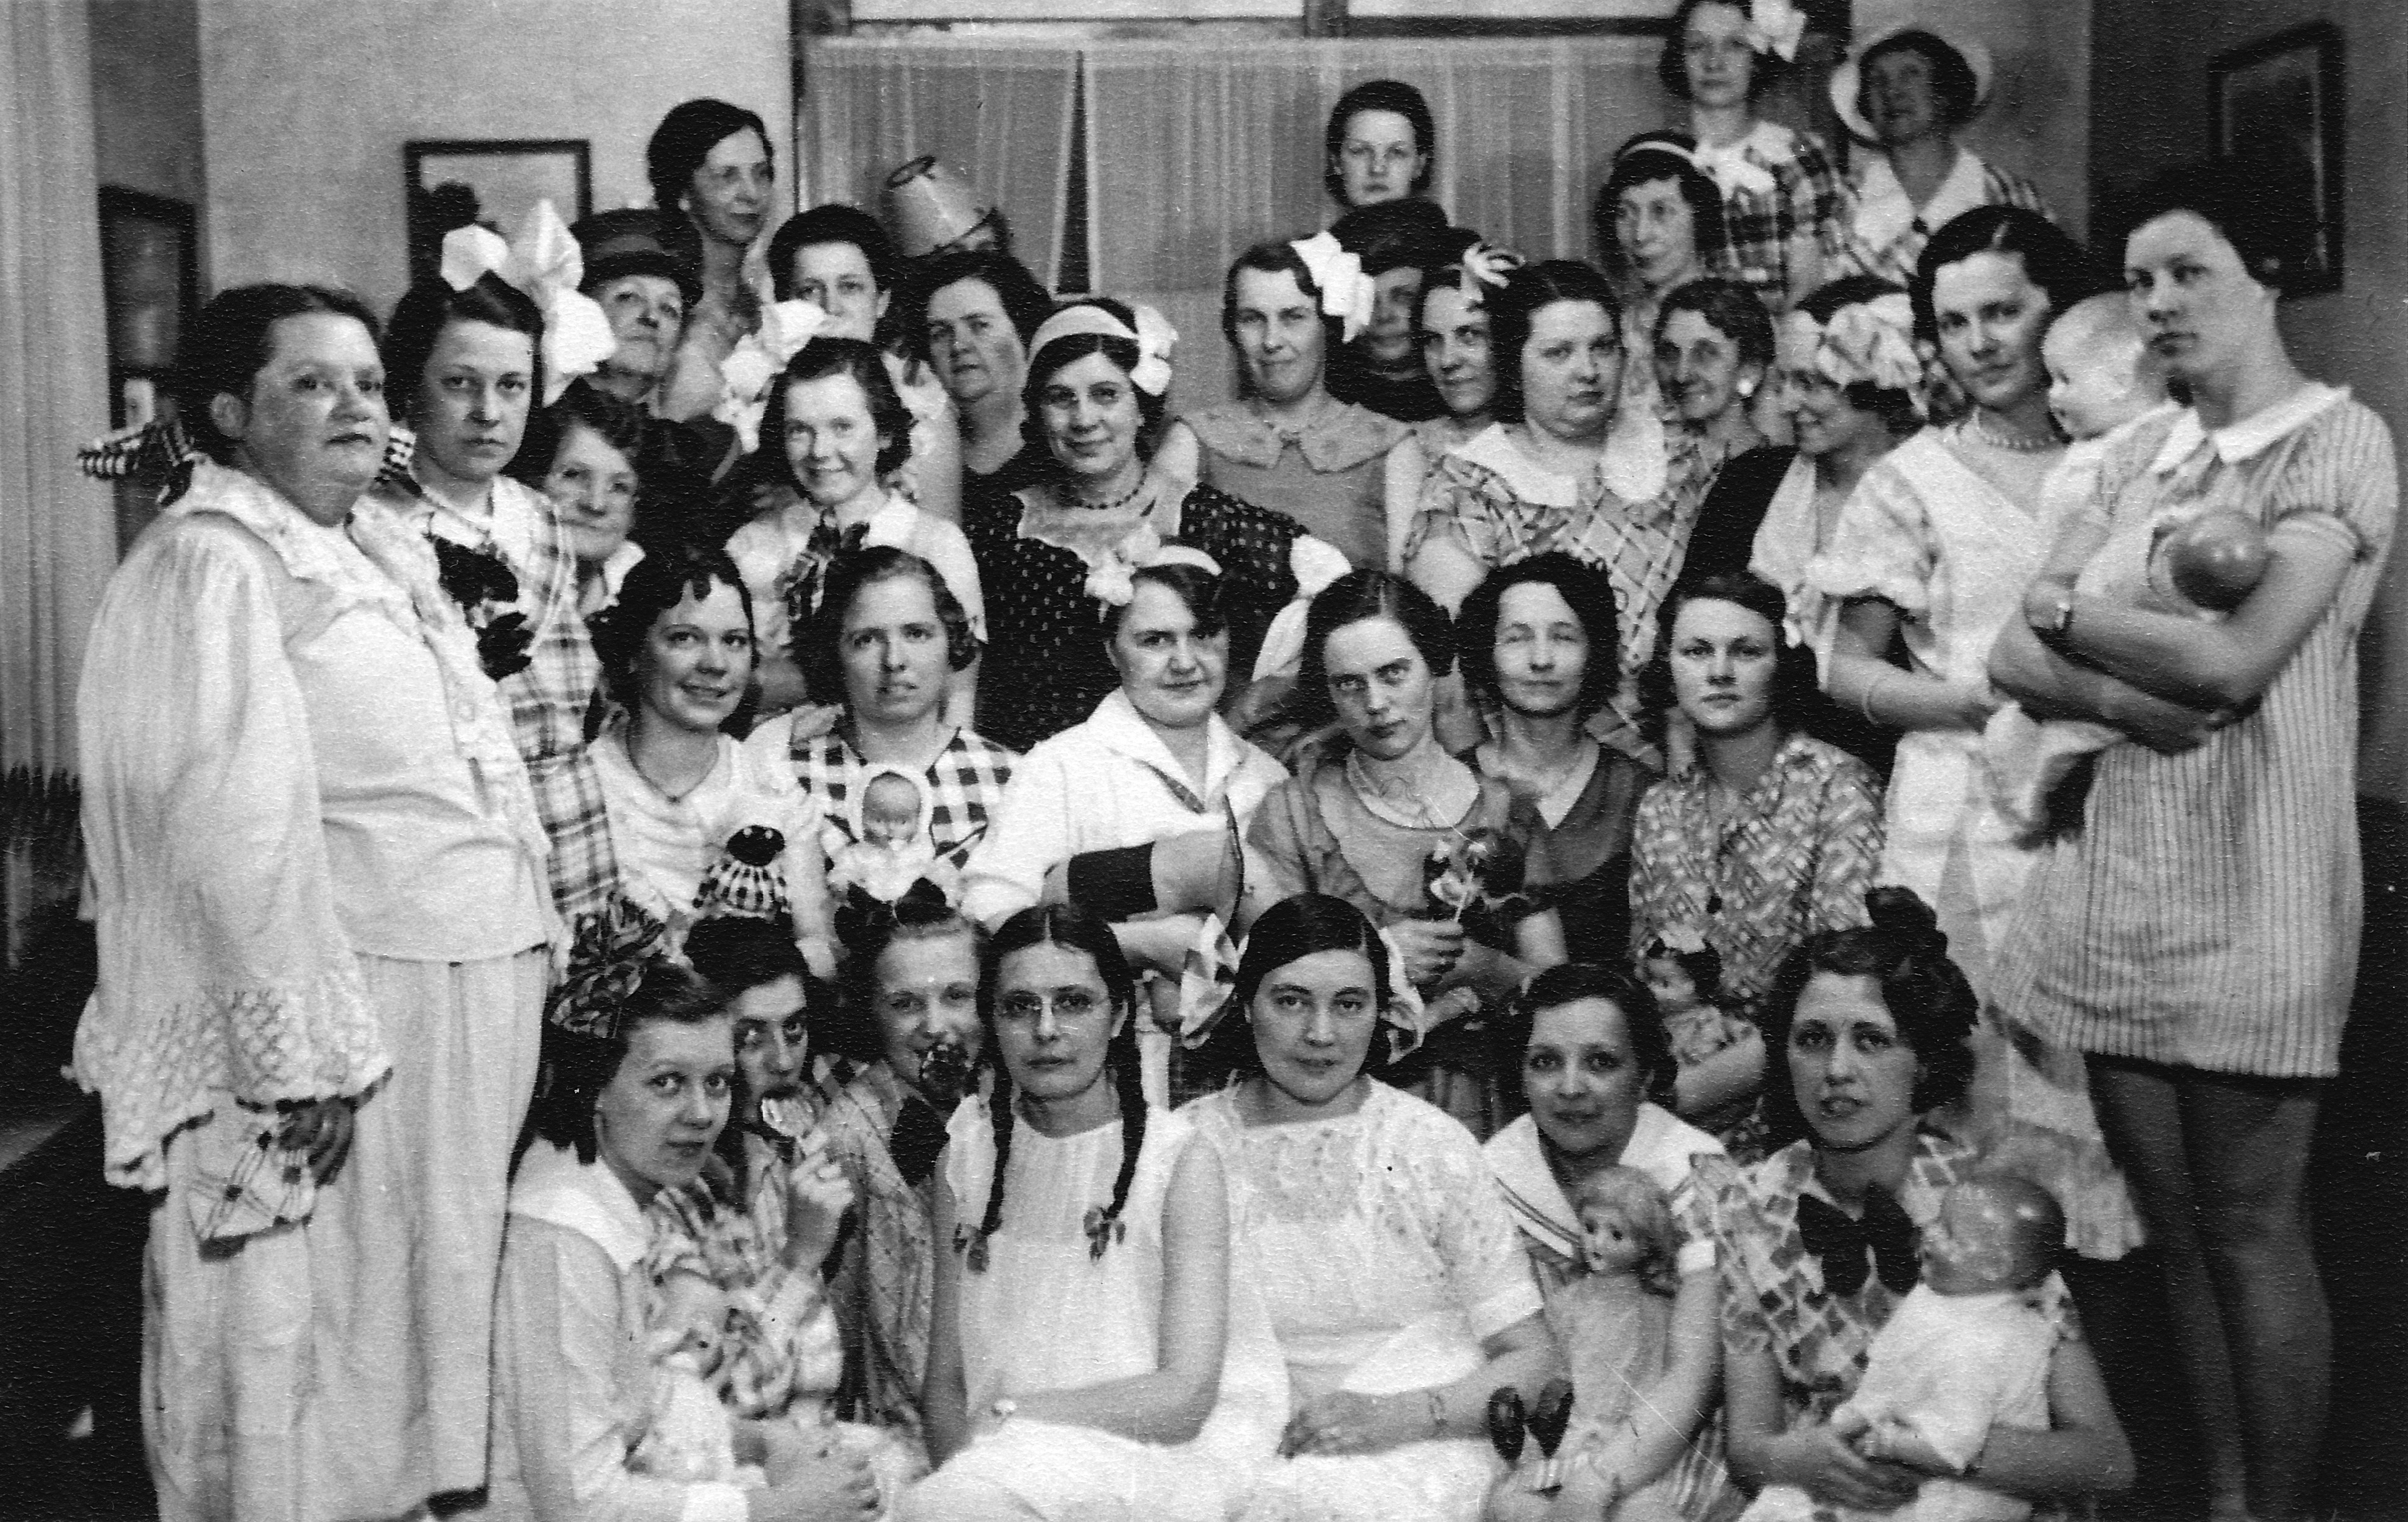 Morenci Business Women Group at its “Doll party”.  1935.  Ida Murfitt, Gerry Ranger, Carrie Murfitt, Alice Ranger, ___________, Verna Adams, ___________, ___________, ___________, Dora Goff, _____________, Mamie Anderson, Hazel Butts, Alberta Hoffman, Theda McCurdy, Blanche Shields, Leone Boley, Elsie Clapp, Bernice Siders, Blance Hyslop, _________, Fern Foster, _____________, _____________, Alice Guss, Louise Gardiner, Doris Smith, Betty Goodyear, Margaret Hoffman, ___________, Doris Shaffer, Nellie J. Gardiner.